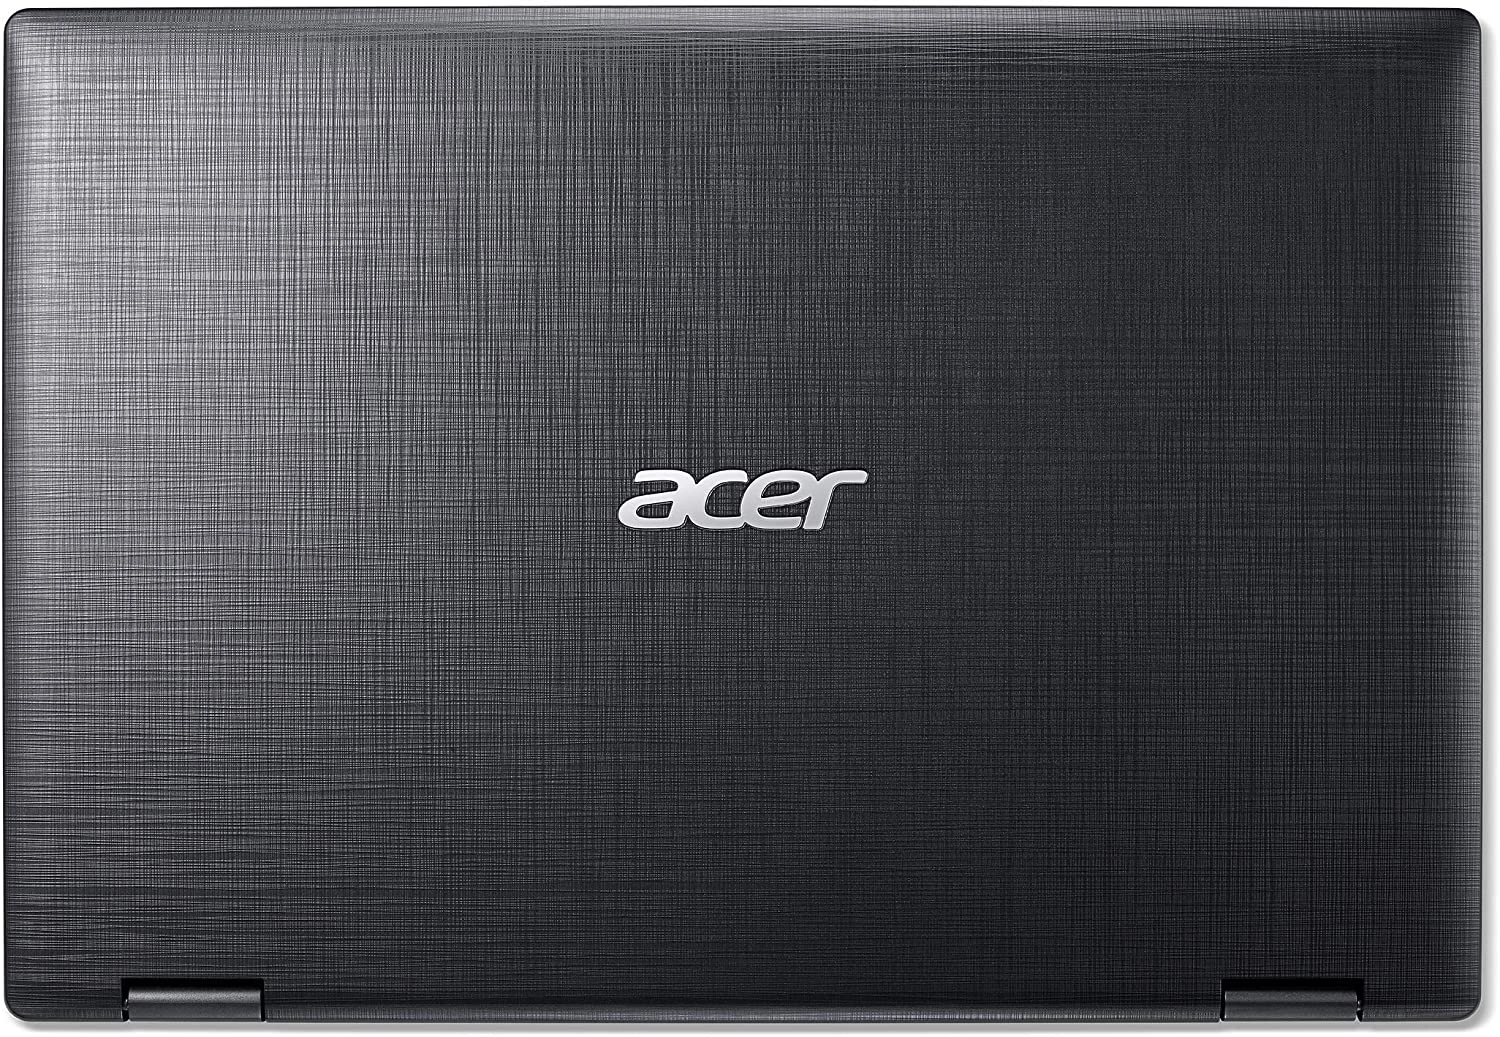 Acer Spin 1 laptop image